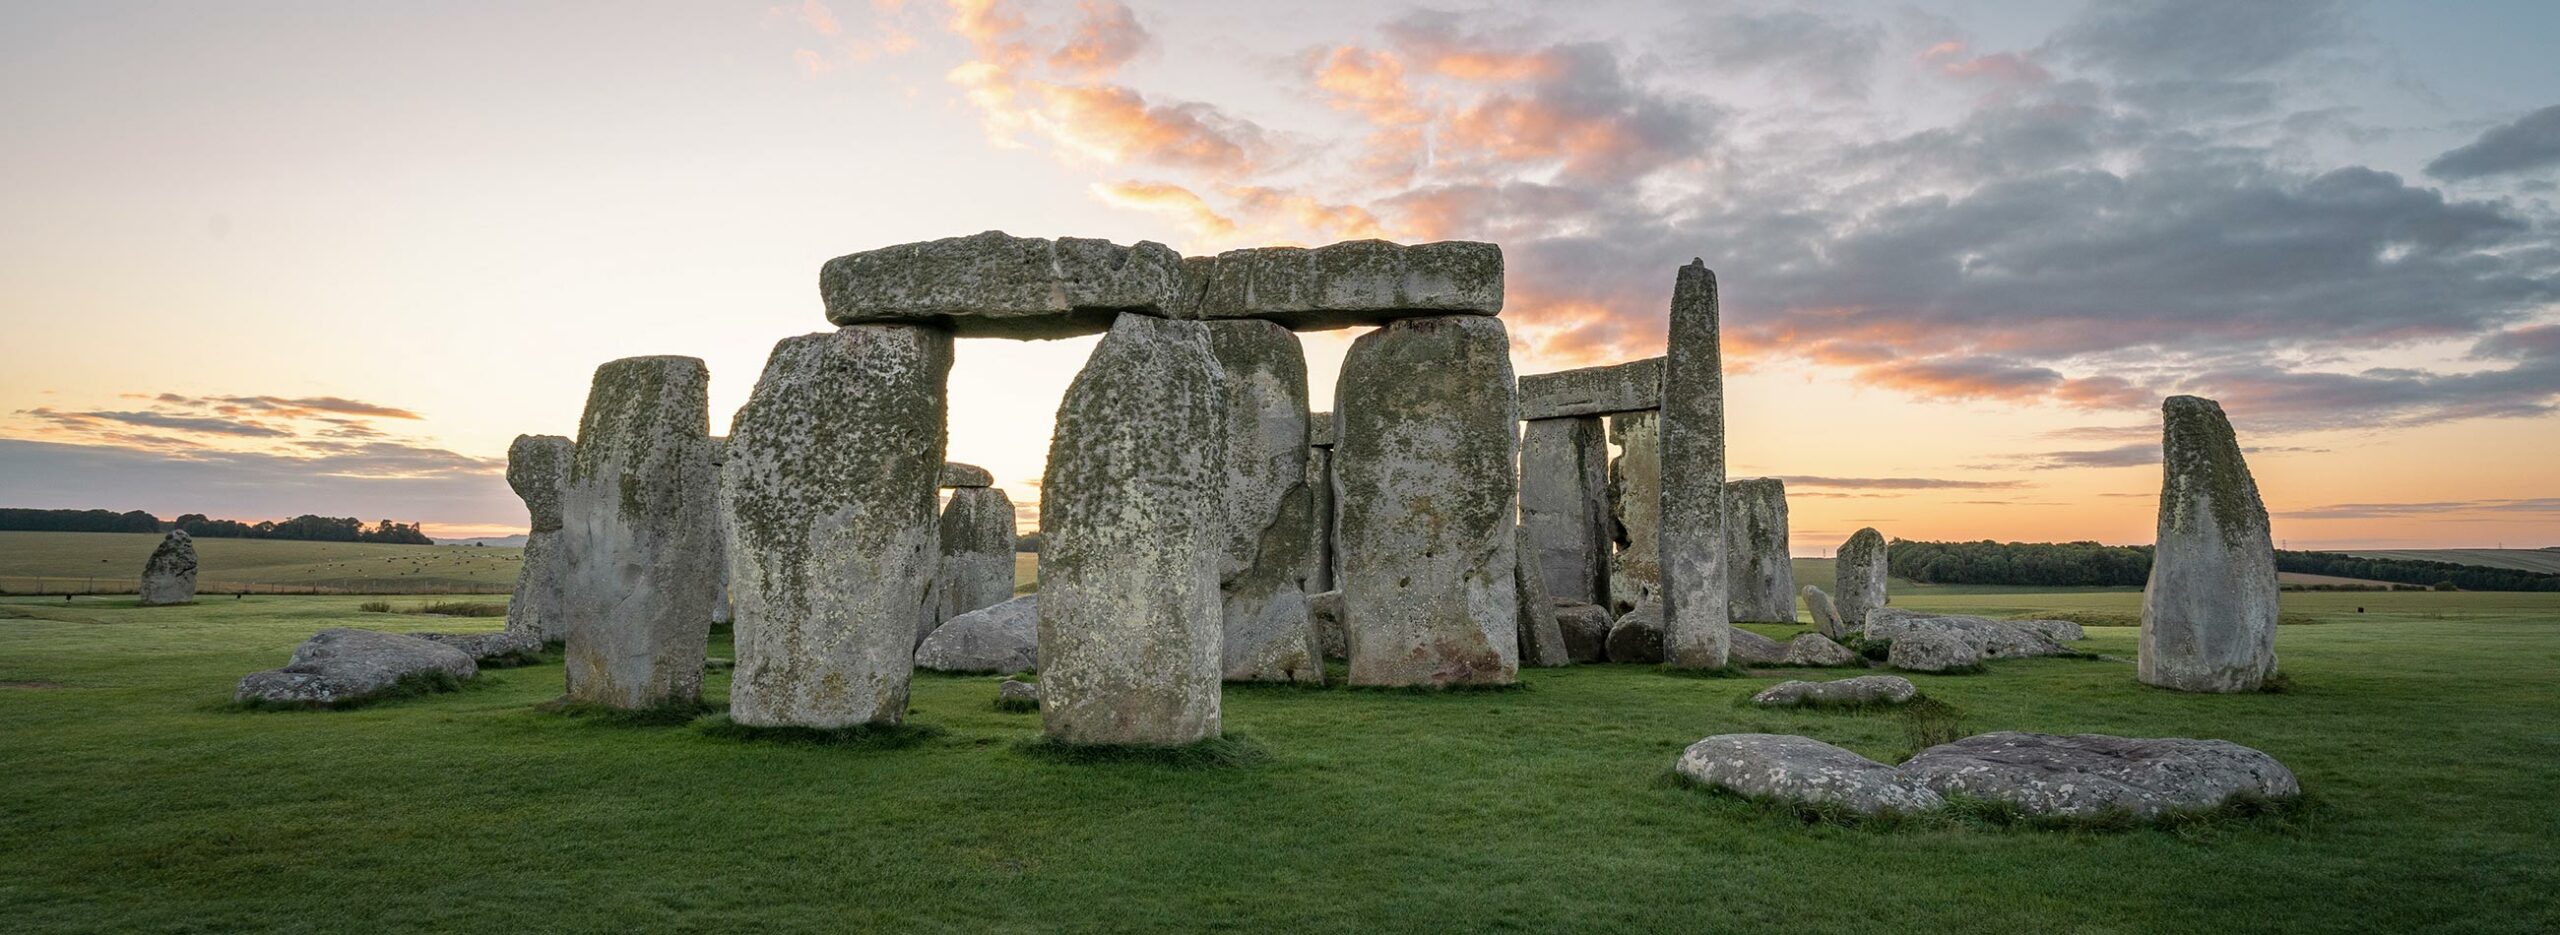 Lever de soleil, Cercle de pierres, Stonehenge, Salisbury, Angleterre / Sunrise, Stone circle, Stonehenge, Salisbury, England, UK